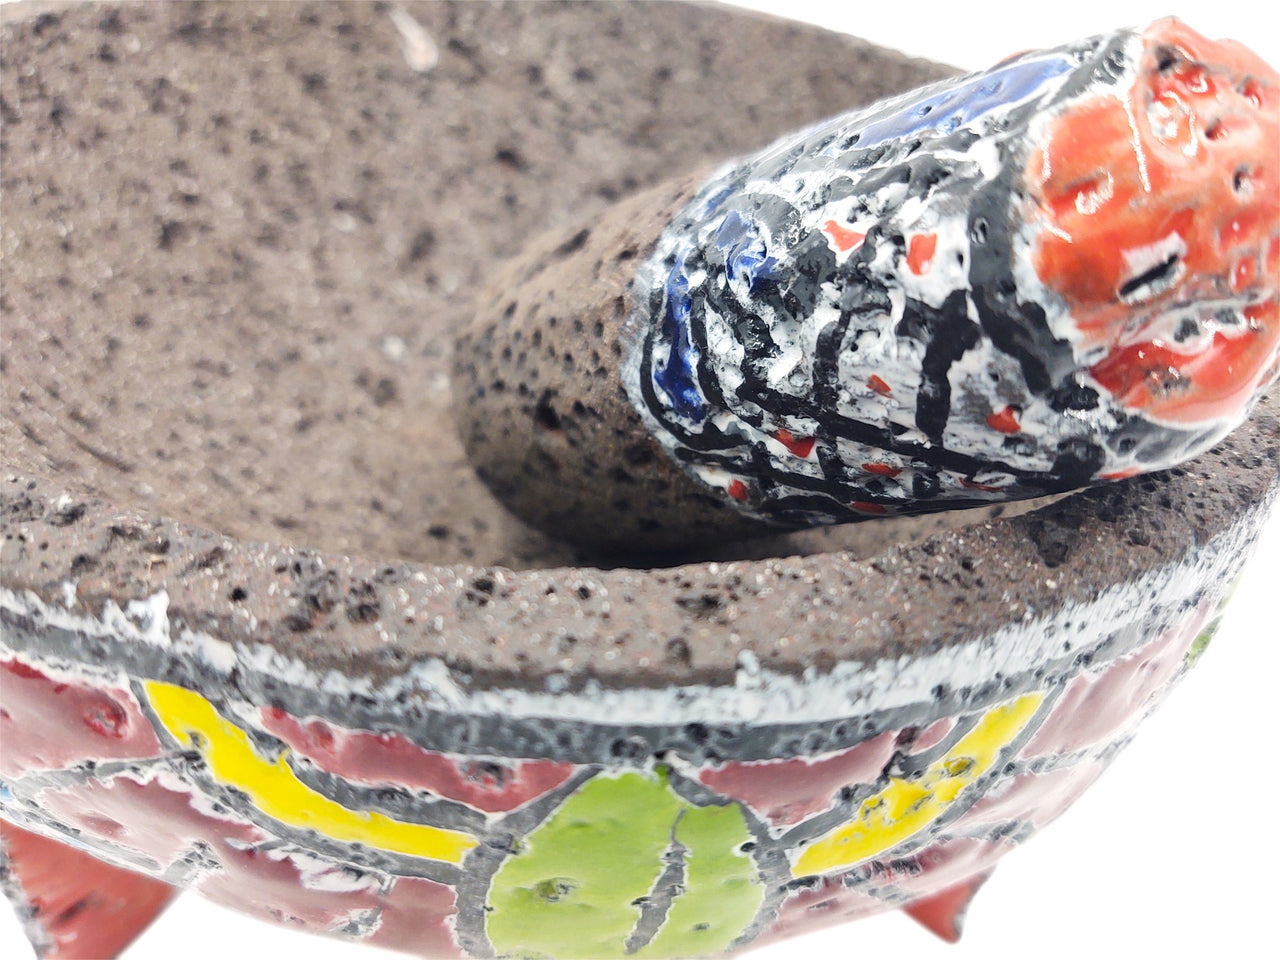 Molcajete de Mexico - Lava Rock Mortar & Pestle (8"L x 8"W x 4.5"H) Hand Painted - VAIRABLE Colors ON Stone - Mexican Kitchen Tool